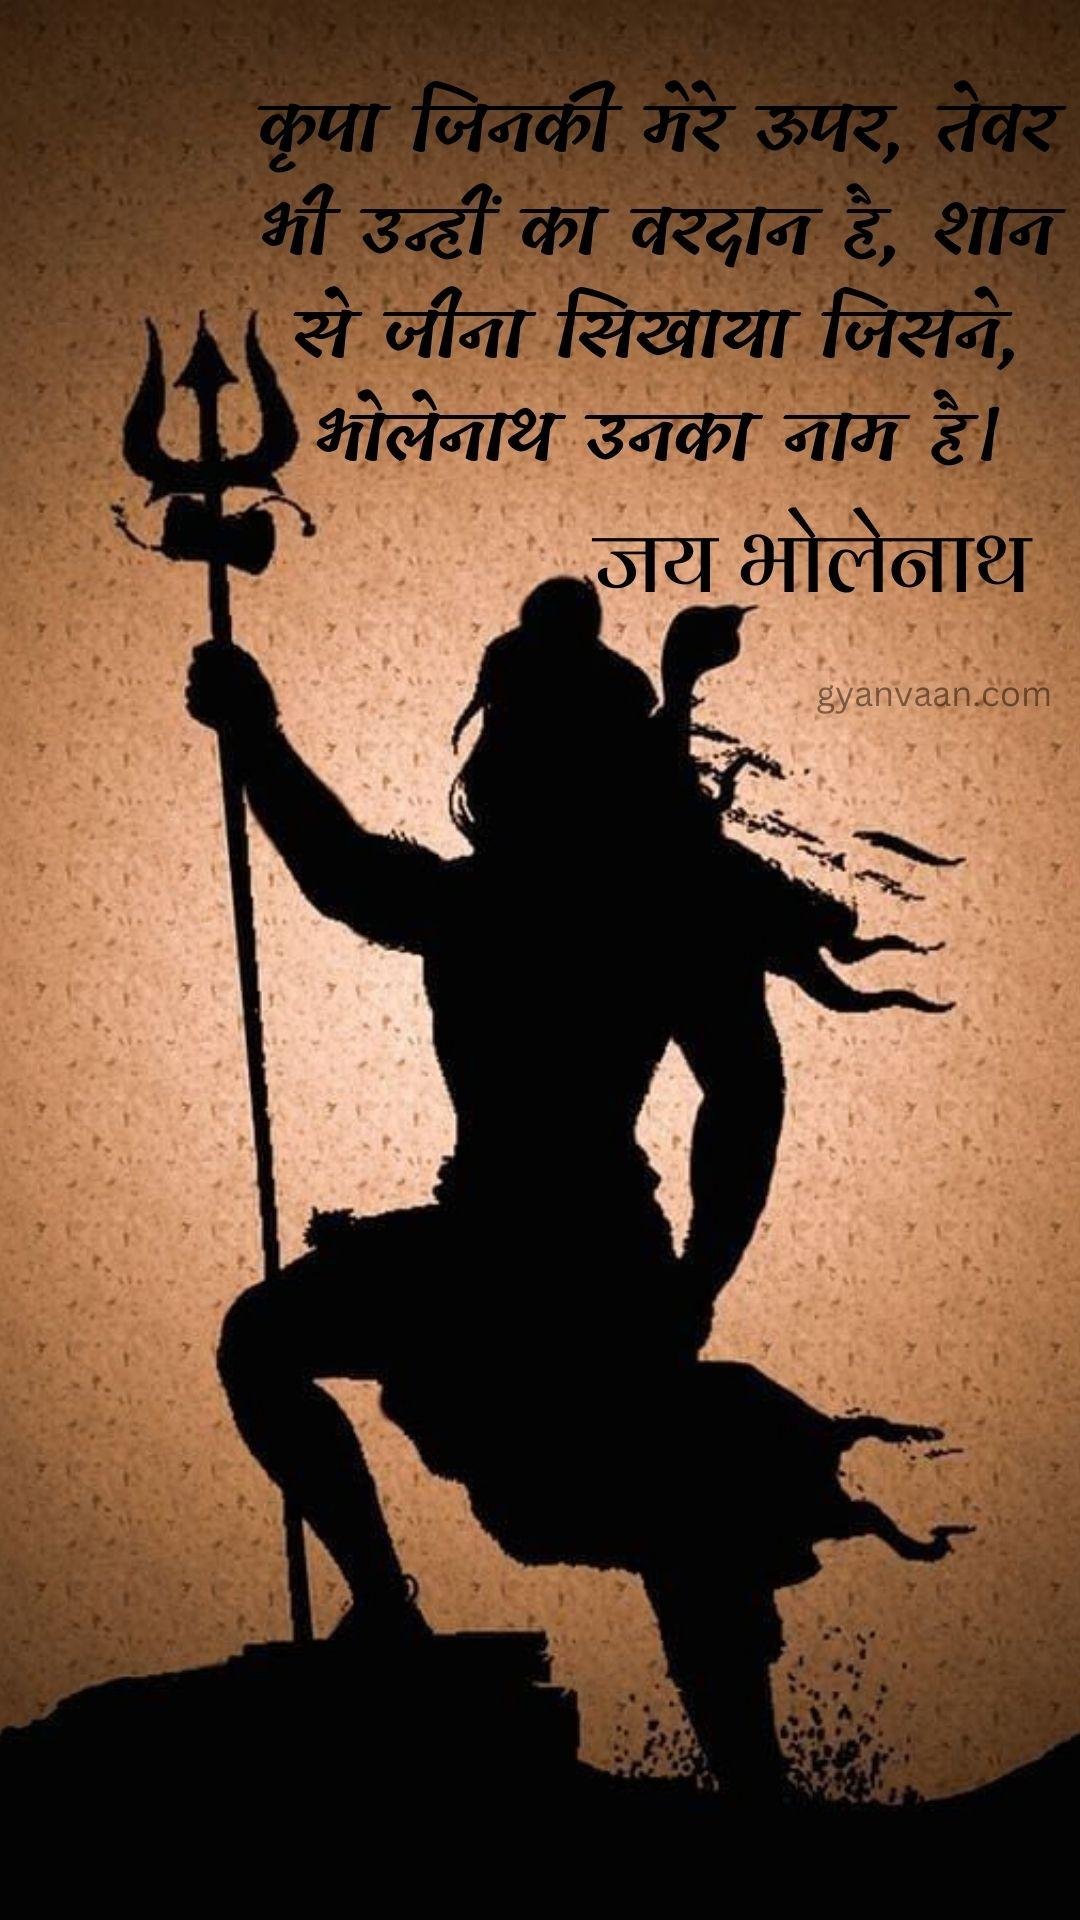 Lord Shiva Mahadev Quotes And Mahakal Status In Hindi For Mobile 32 - Shiva Quotes